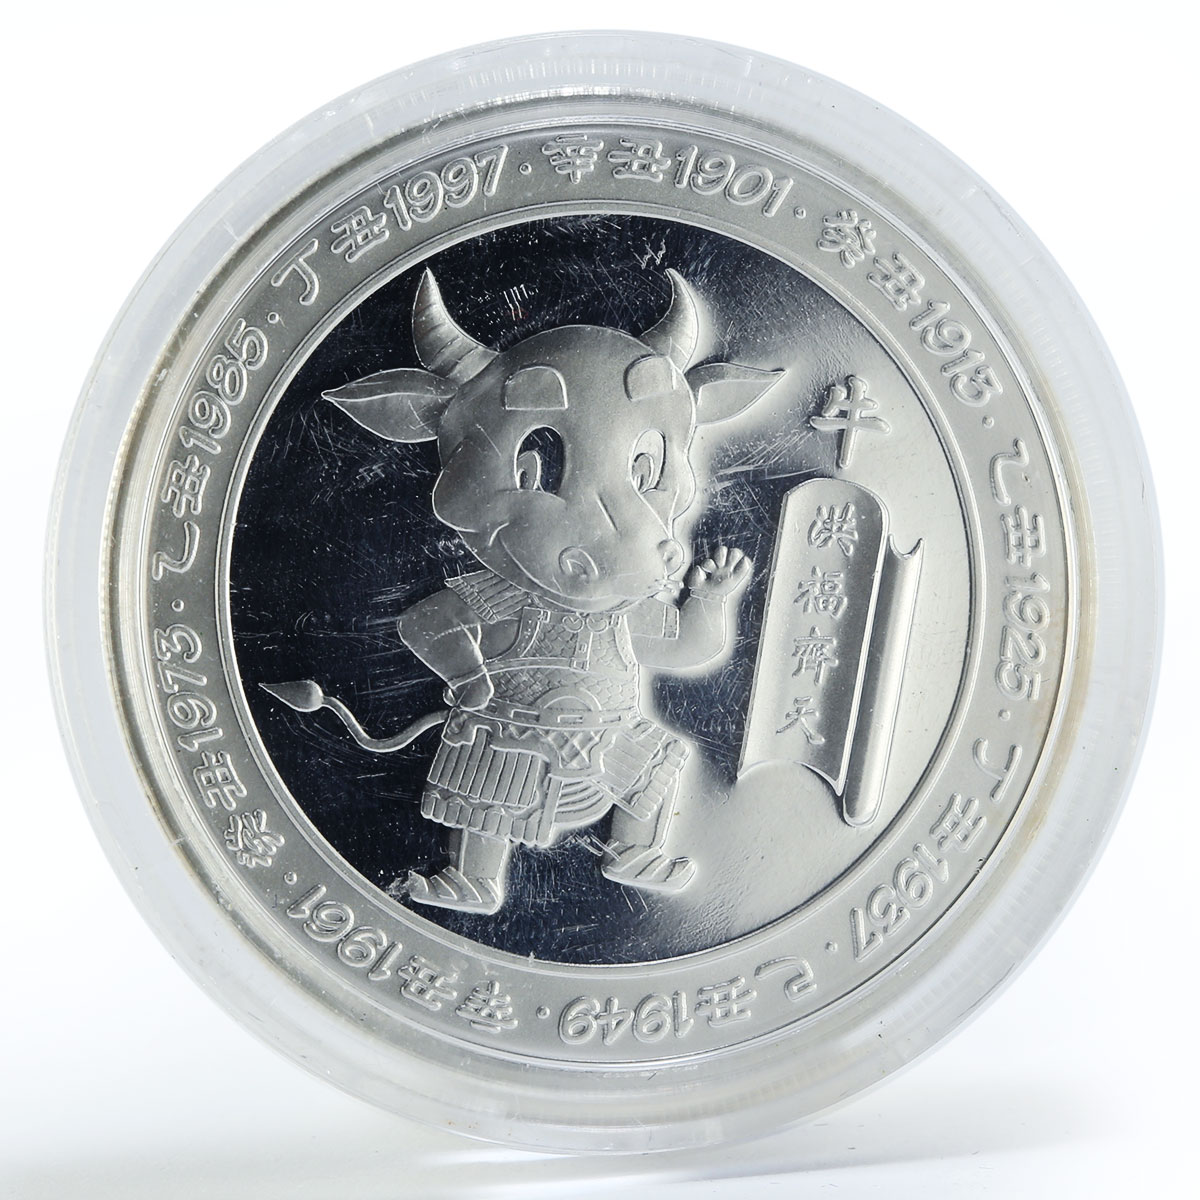 Zambia 5000 kwacha Year of the Ox Dragon silver coin 2009